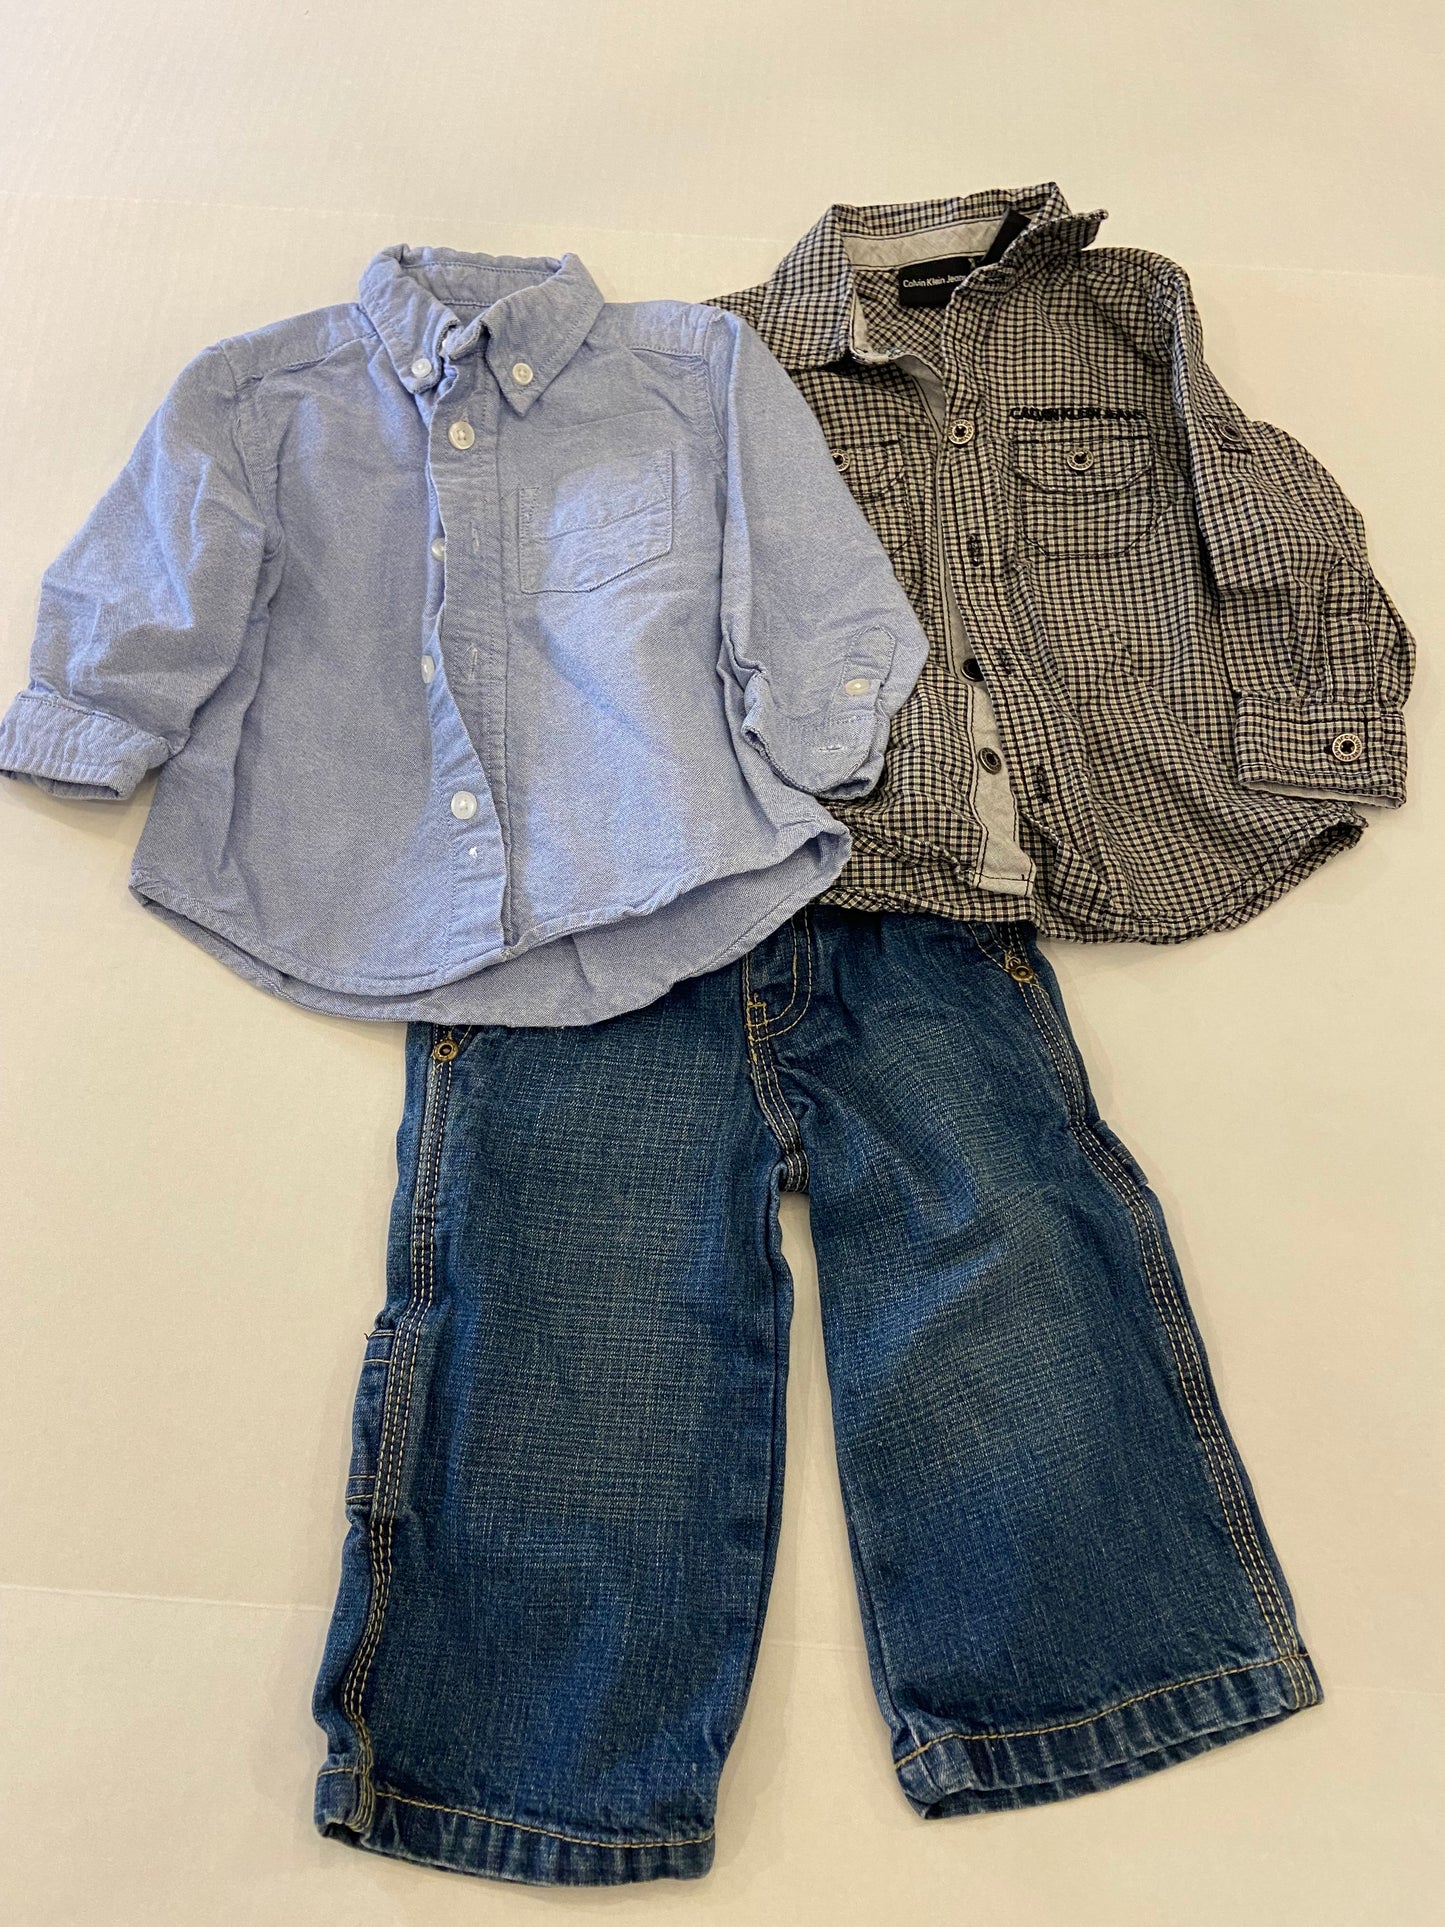 Boys 12 mos dress shirt & jeans bundle